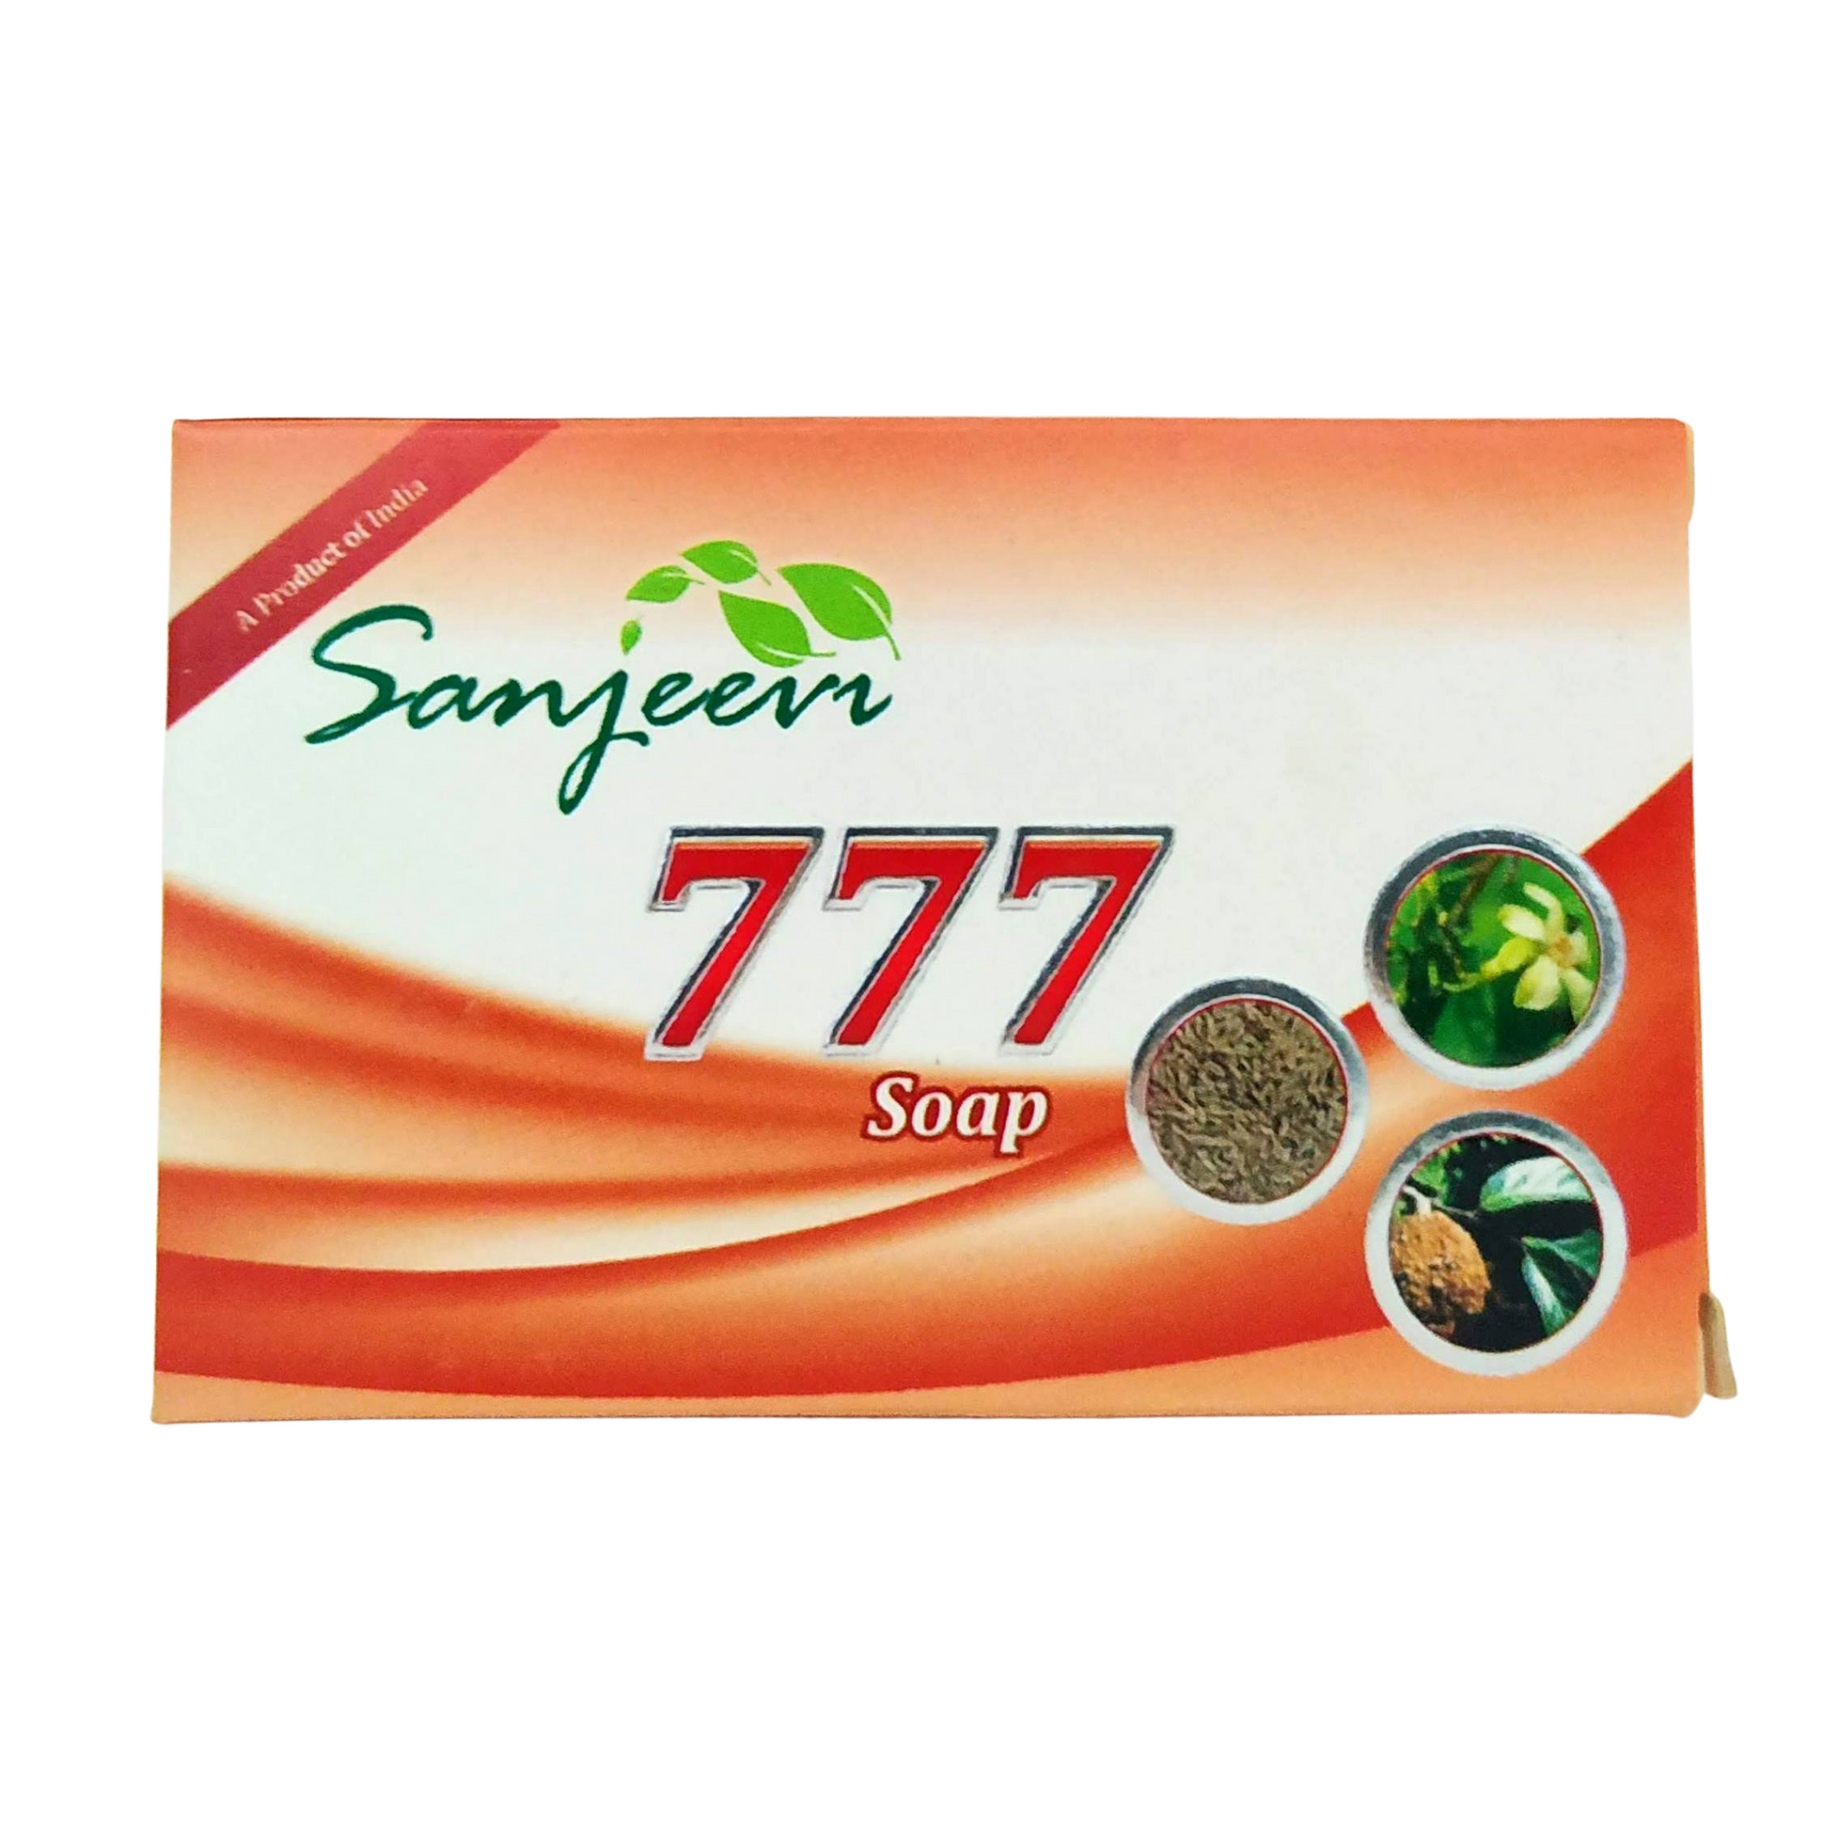 Shop Sanjeevi 777 Soap 75gm at price 72.00 from Sanjeevi Online - Ayush Care